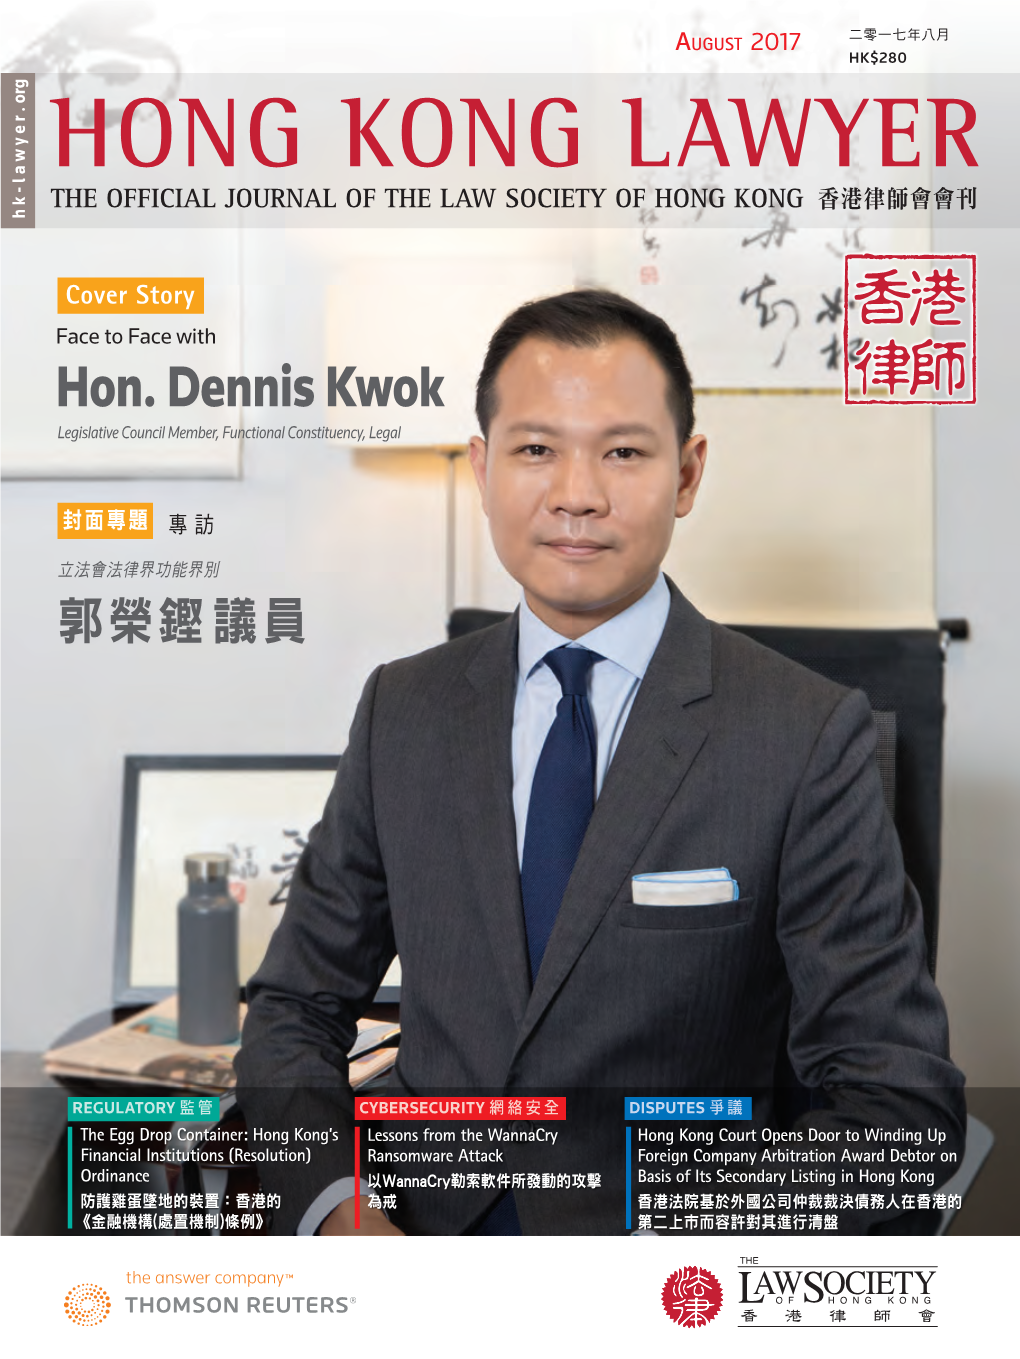 Hon. Dennis Kwok Legislative Council Member, Functional Constituency, Legal